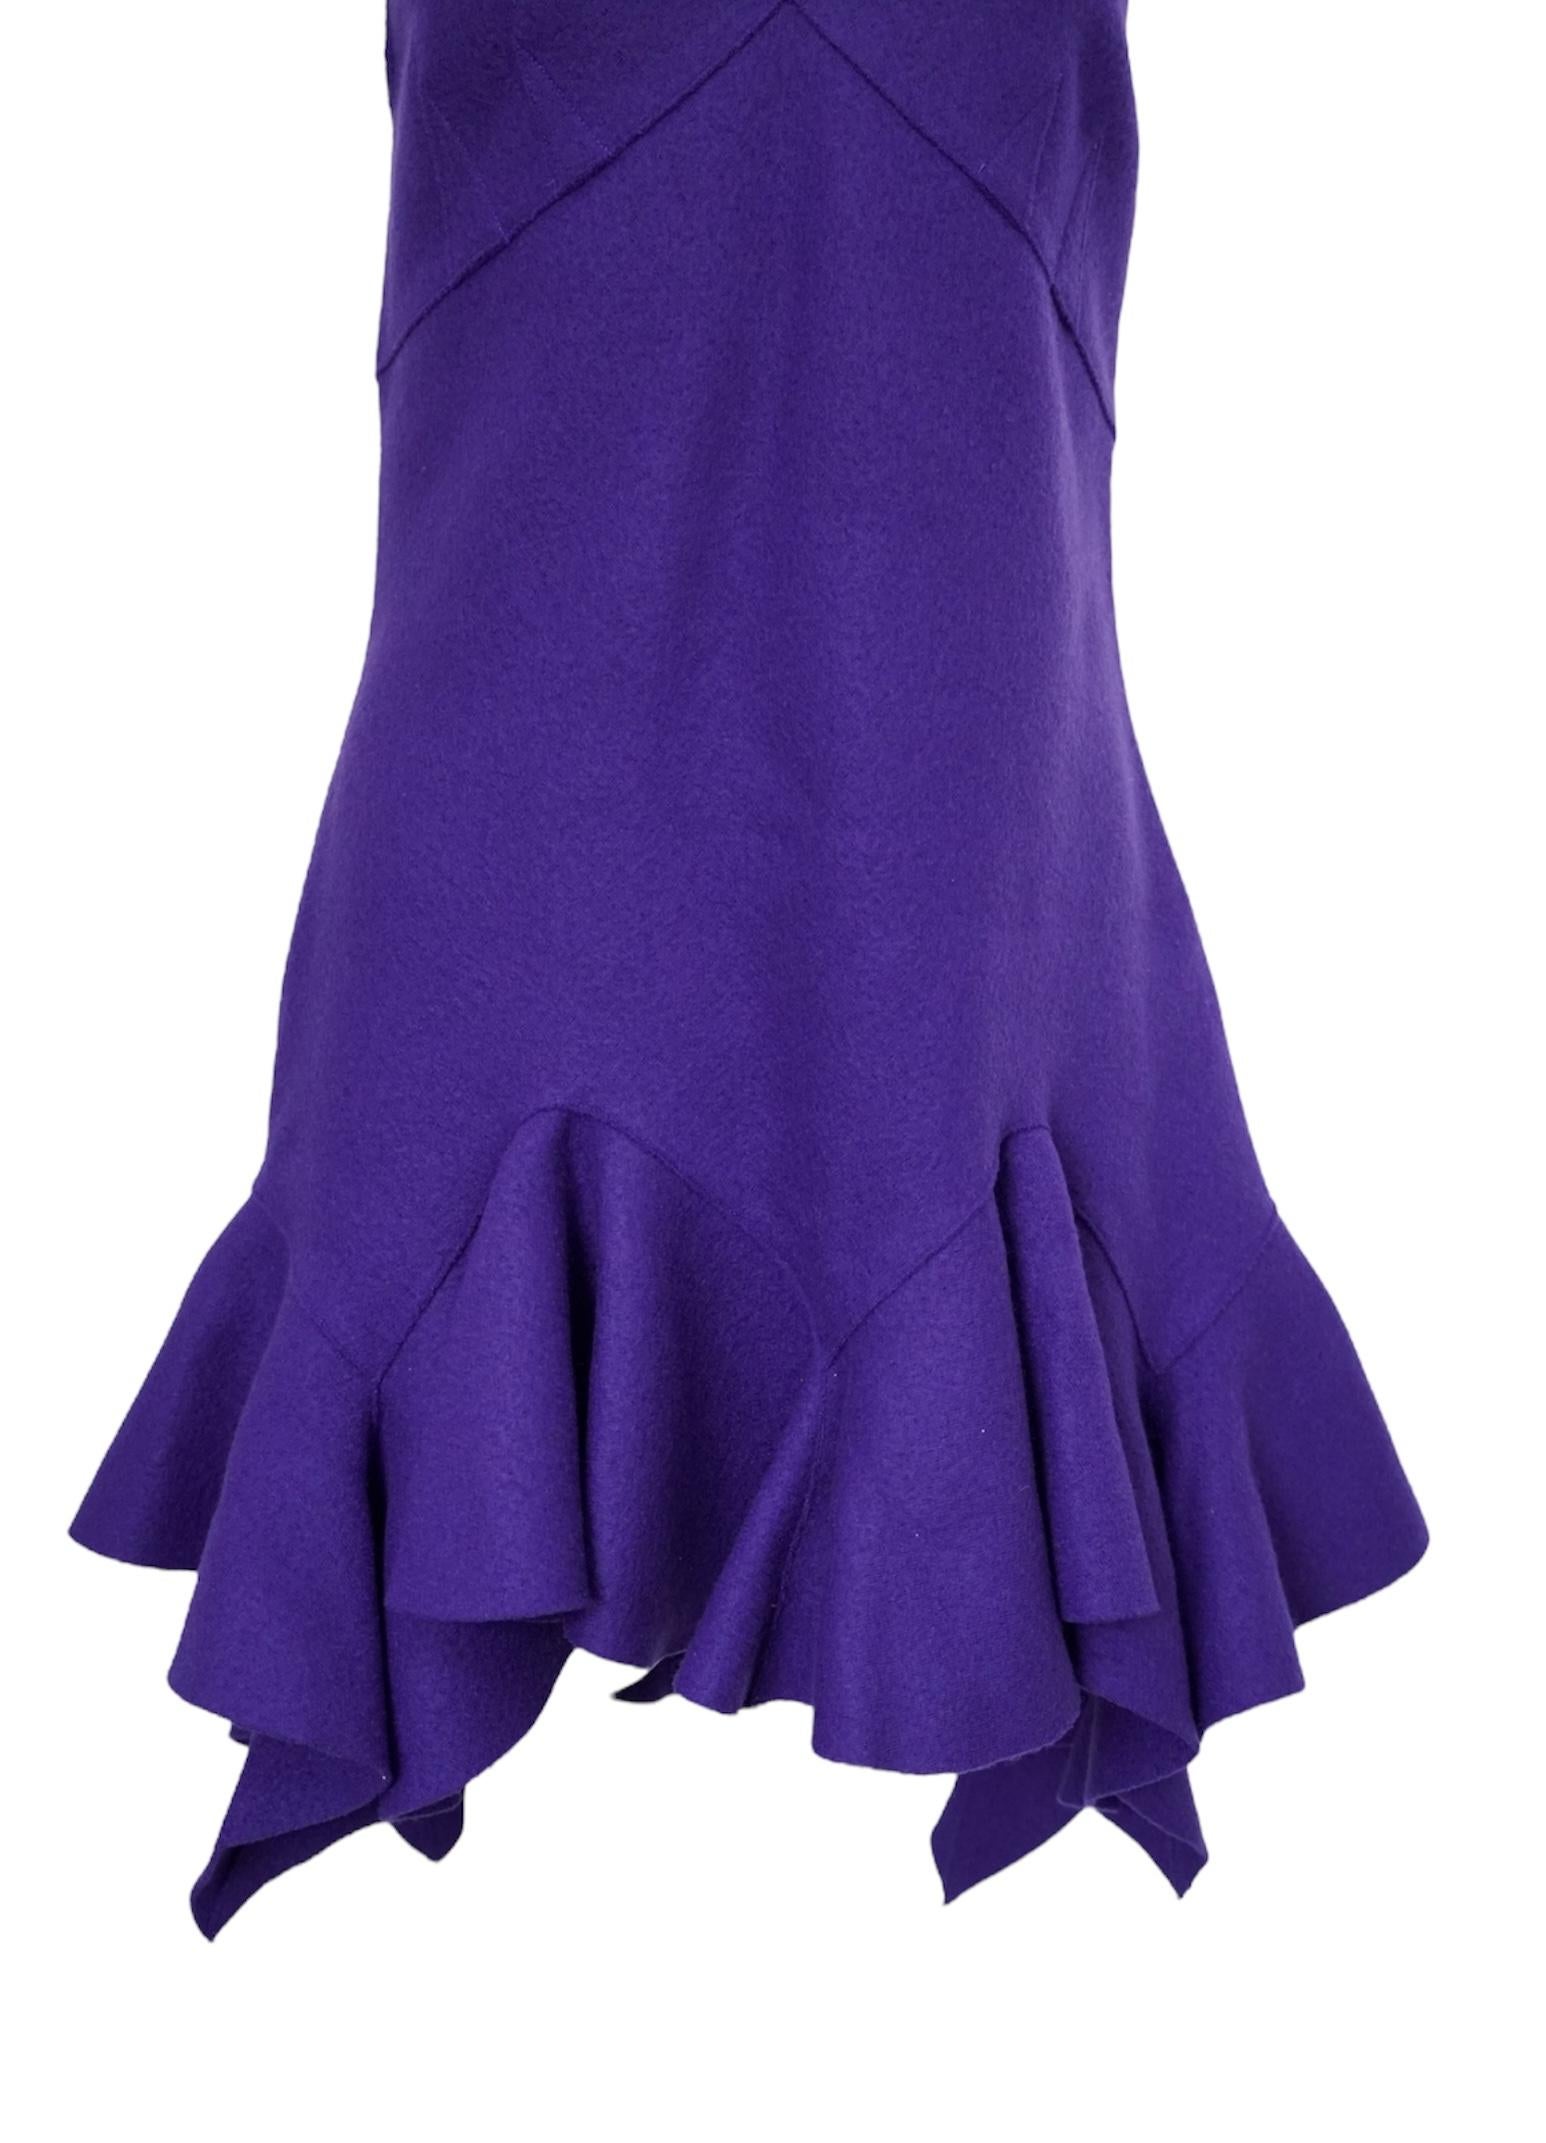 Givenchy Ruffle Wool Purple Mini Dress sz M For Sale 2